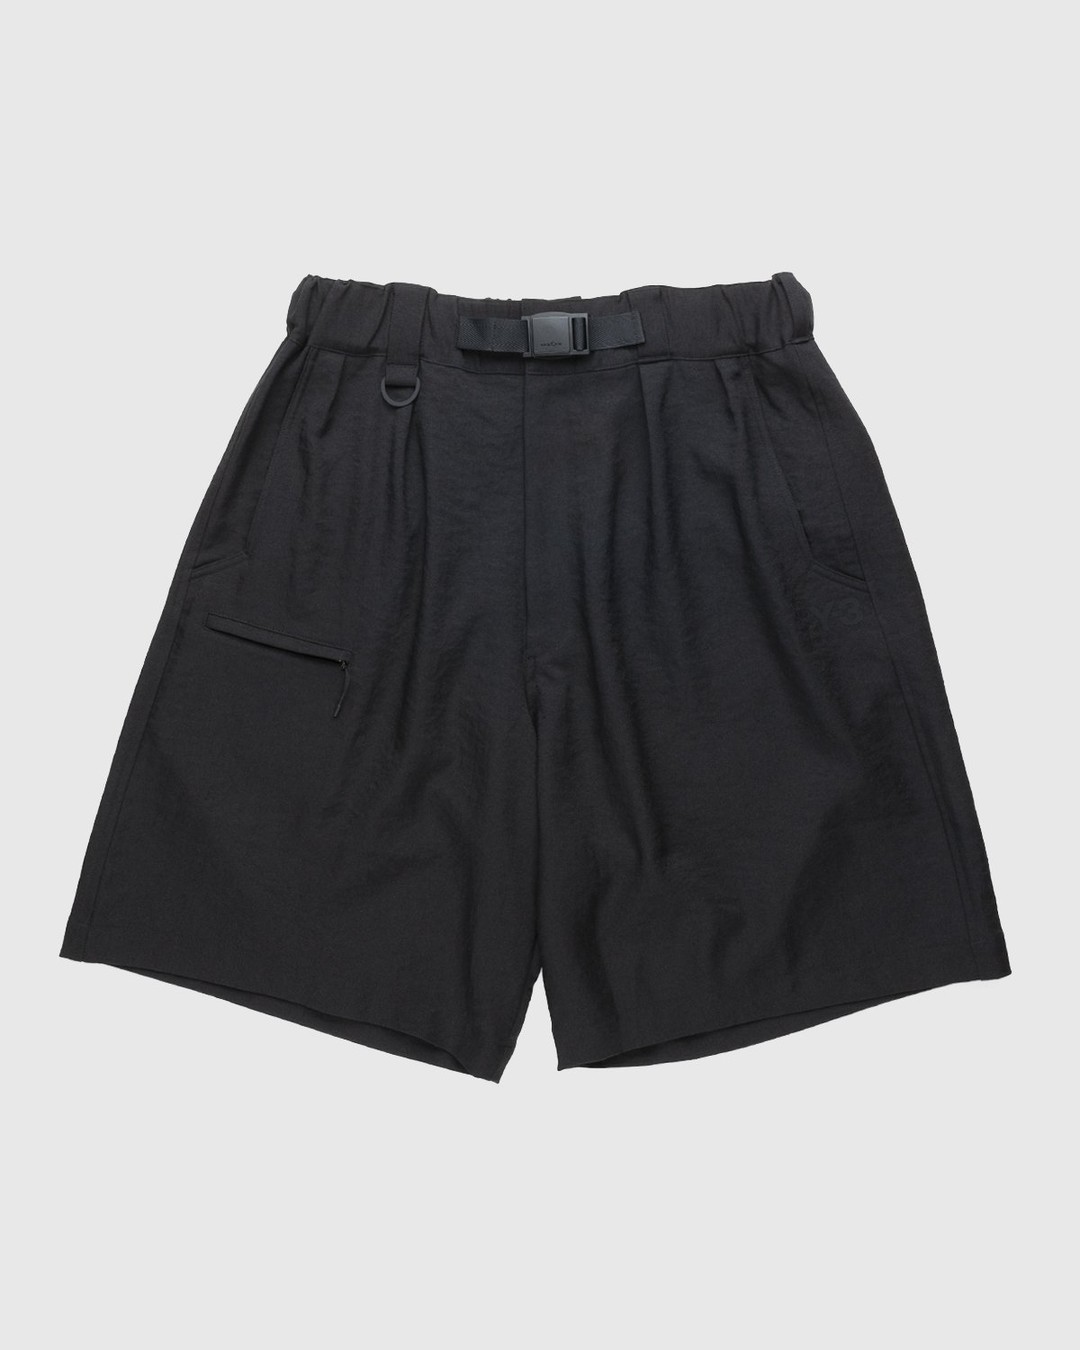 Y-3 – Classic Sport Uniform Shorts Black - Shorts - Black - Image 1